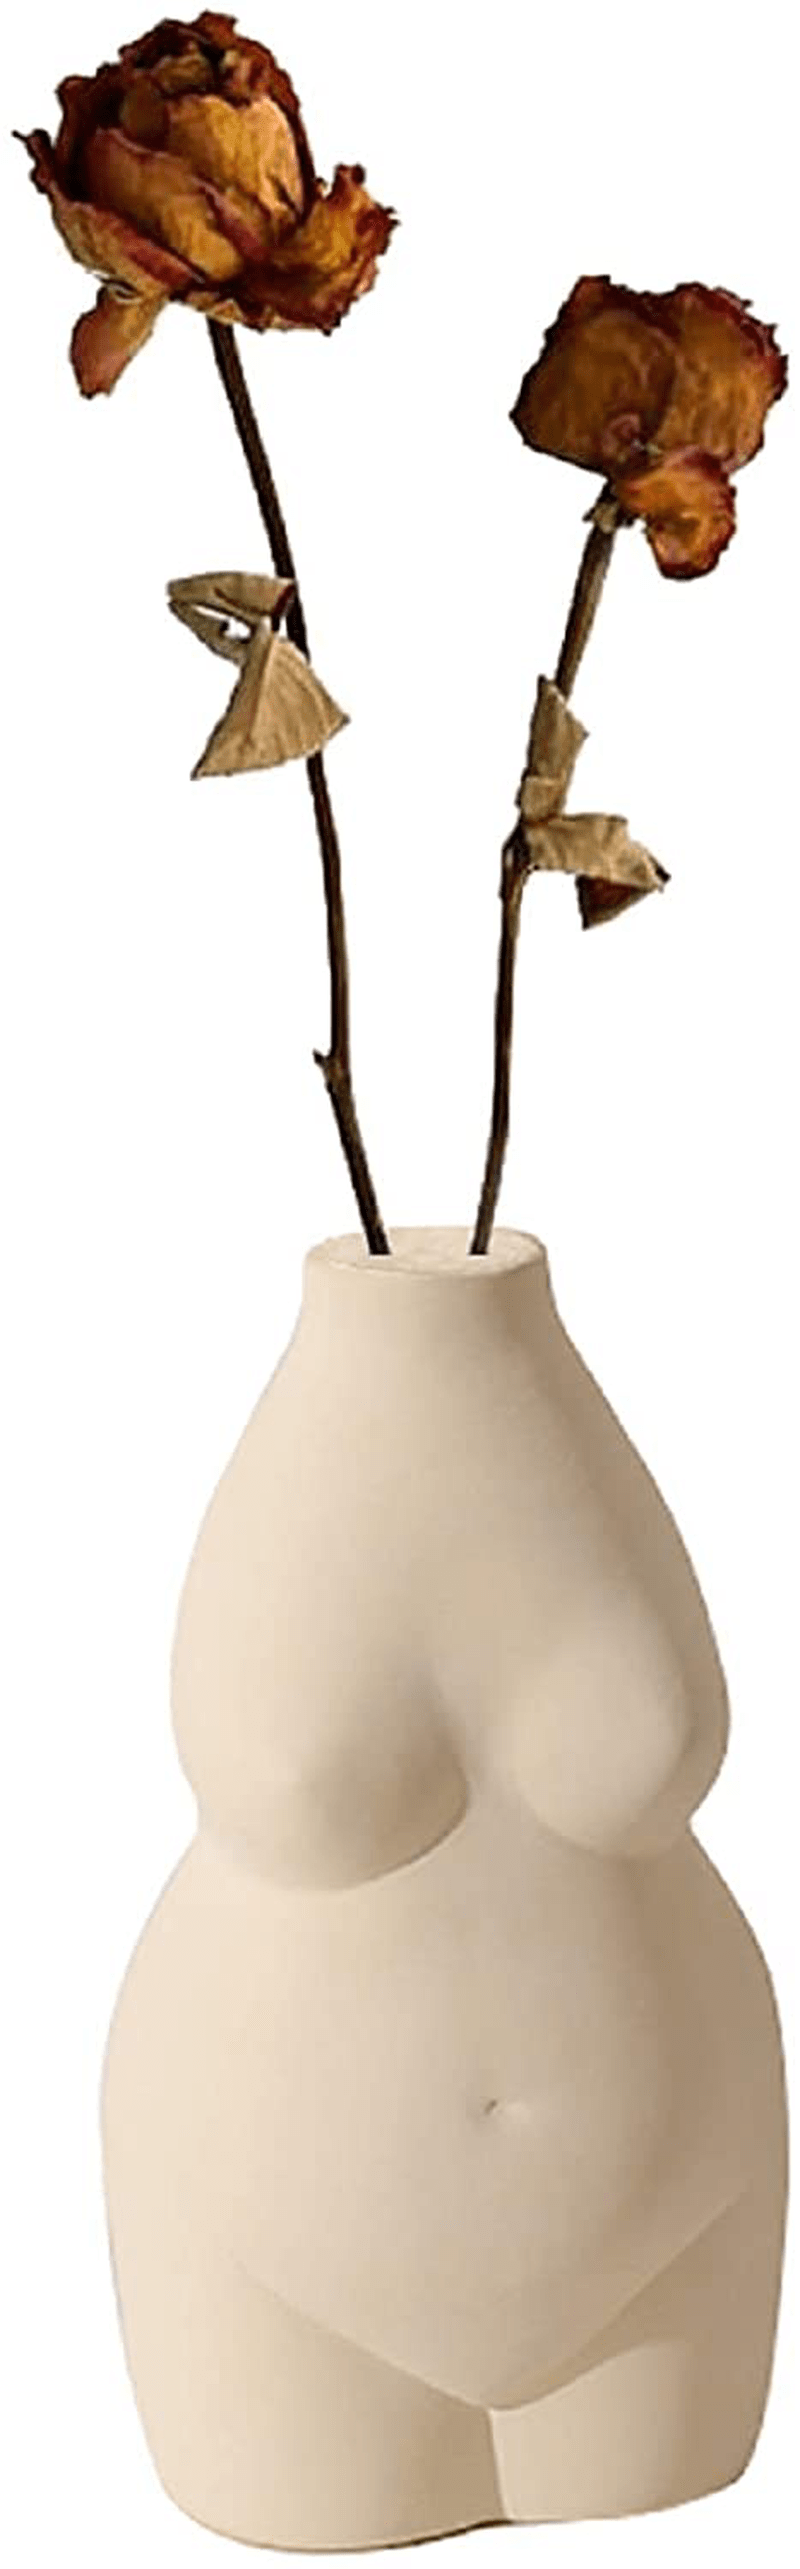 AMITD 6.2" Small Ceramic Flower Vases Decorative Boho Home Decor Female Body Form Art Vase (Beige Body vase) Home & Garden > Decor > Vases AMITD Beige Body Vase  